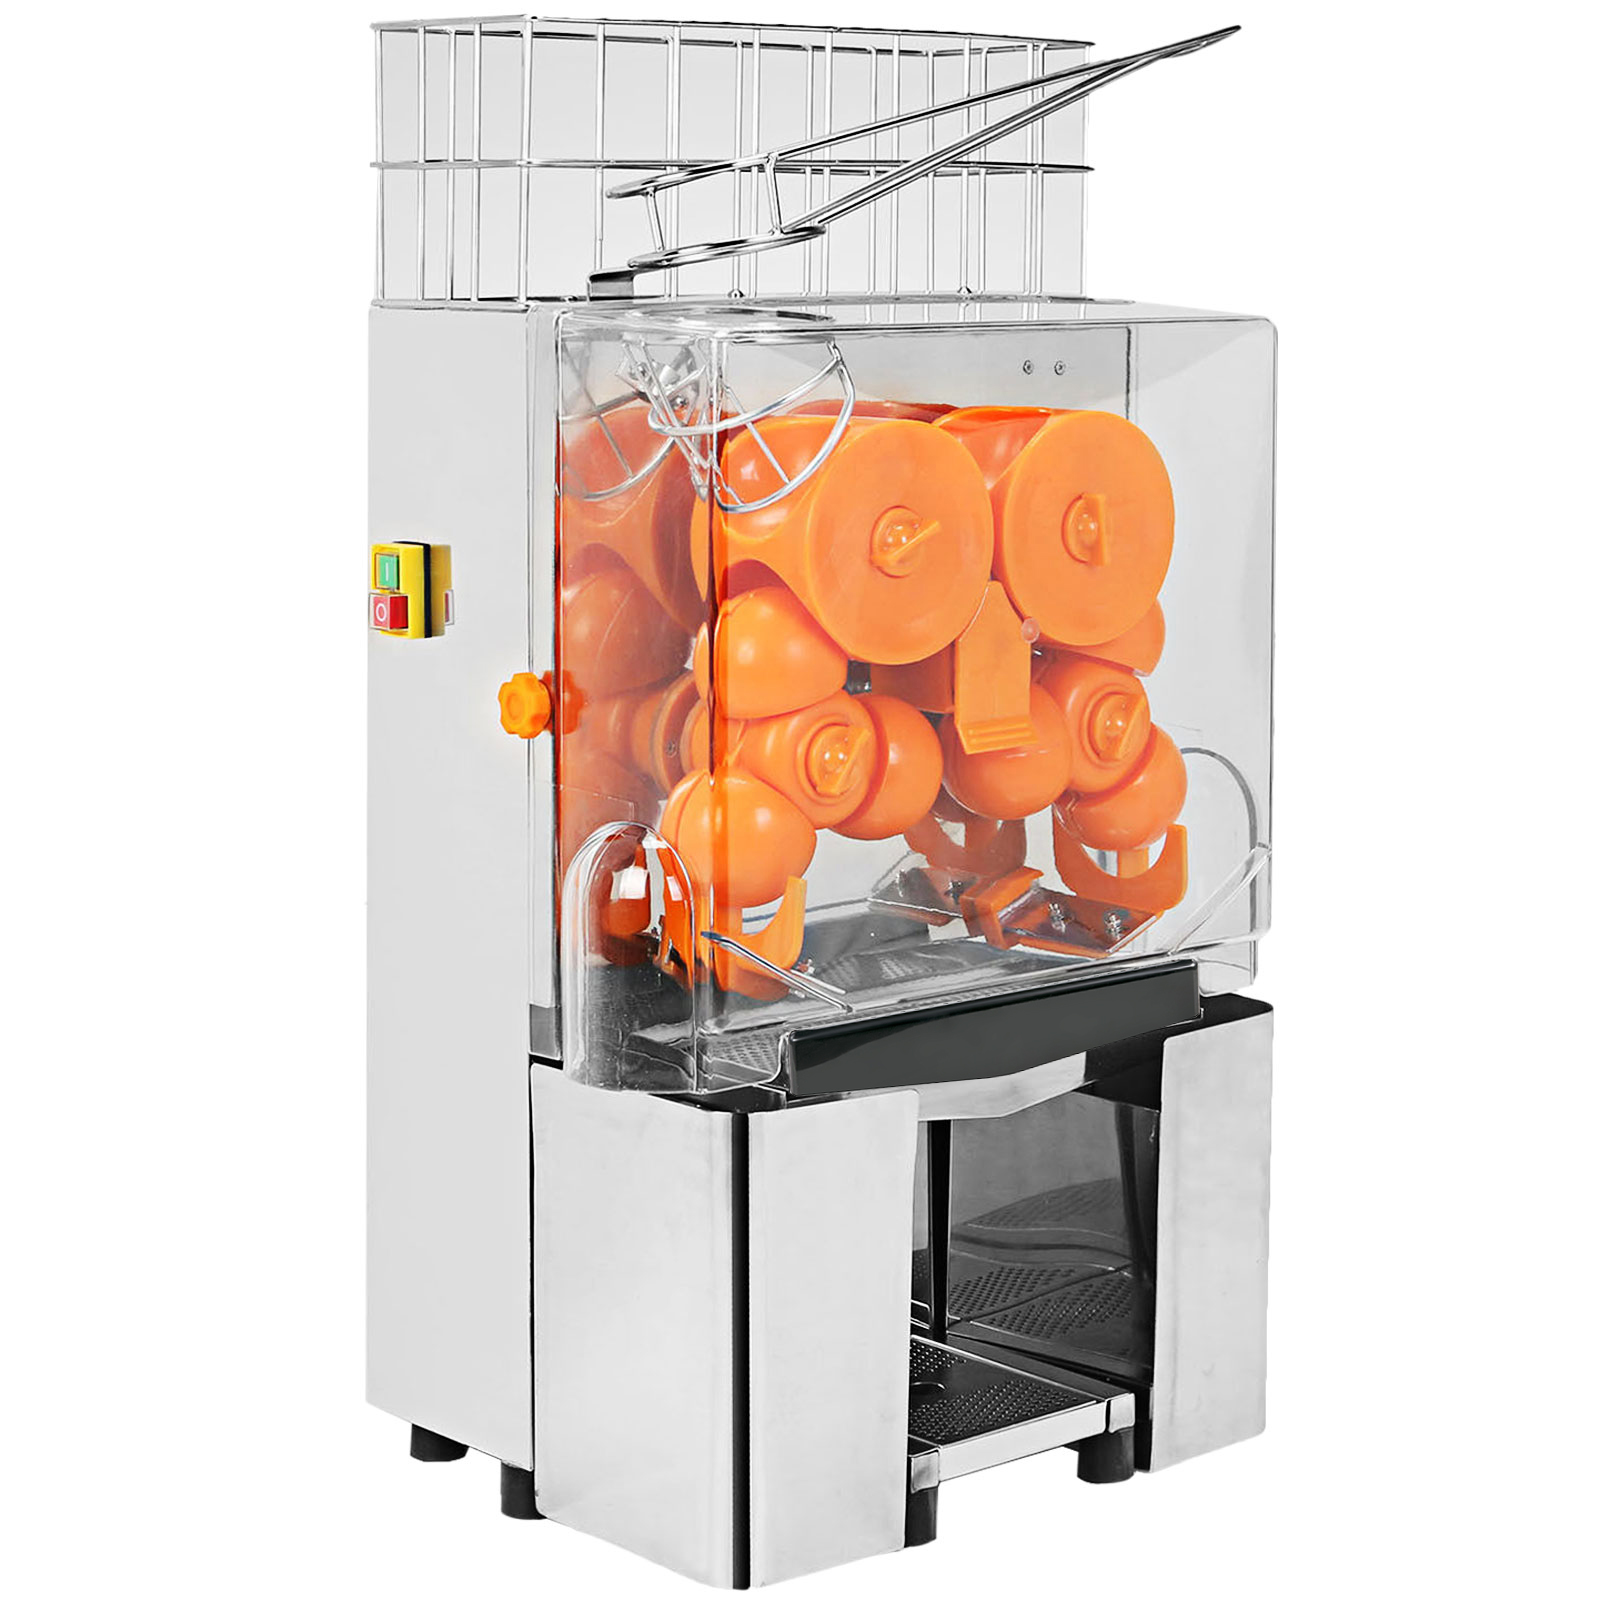 Details about   Automatic Orange Squeezer grapefruit Juice Commercial Extractor Juicer Machine 